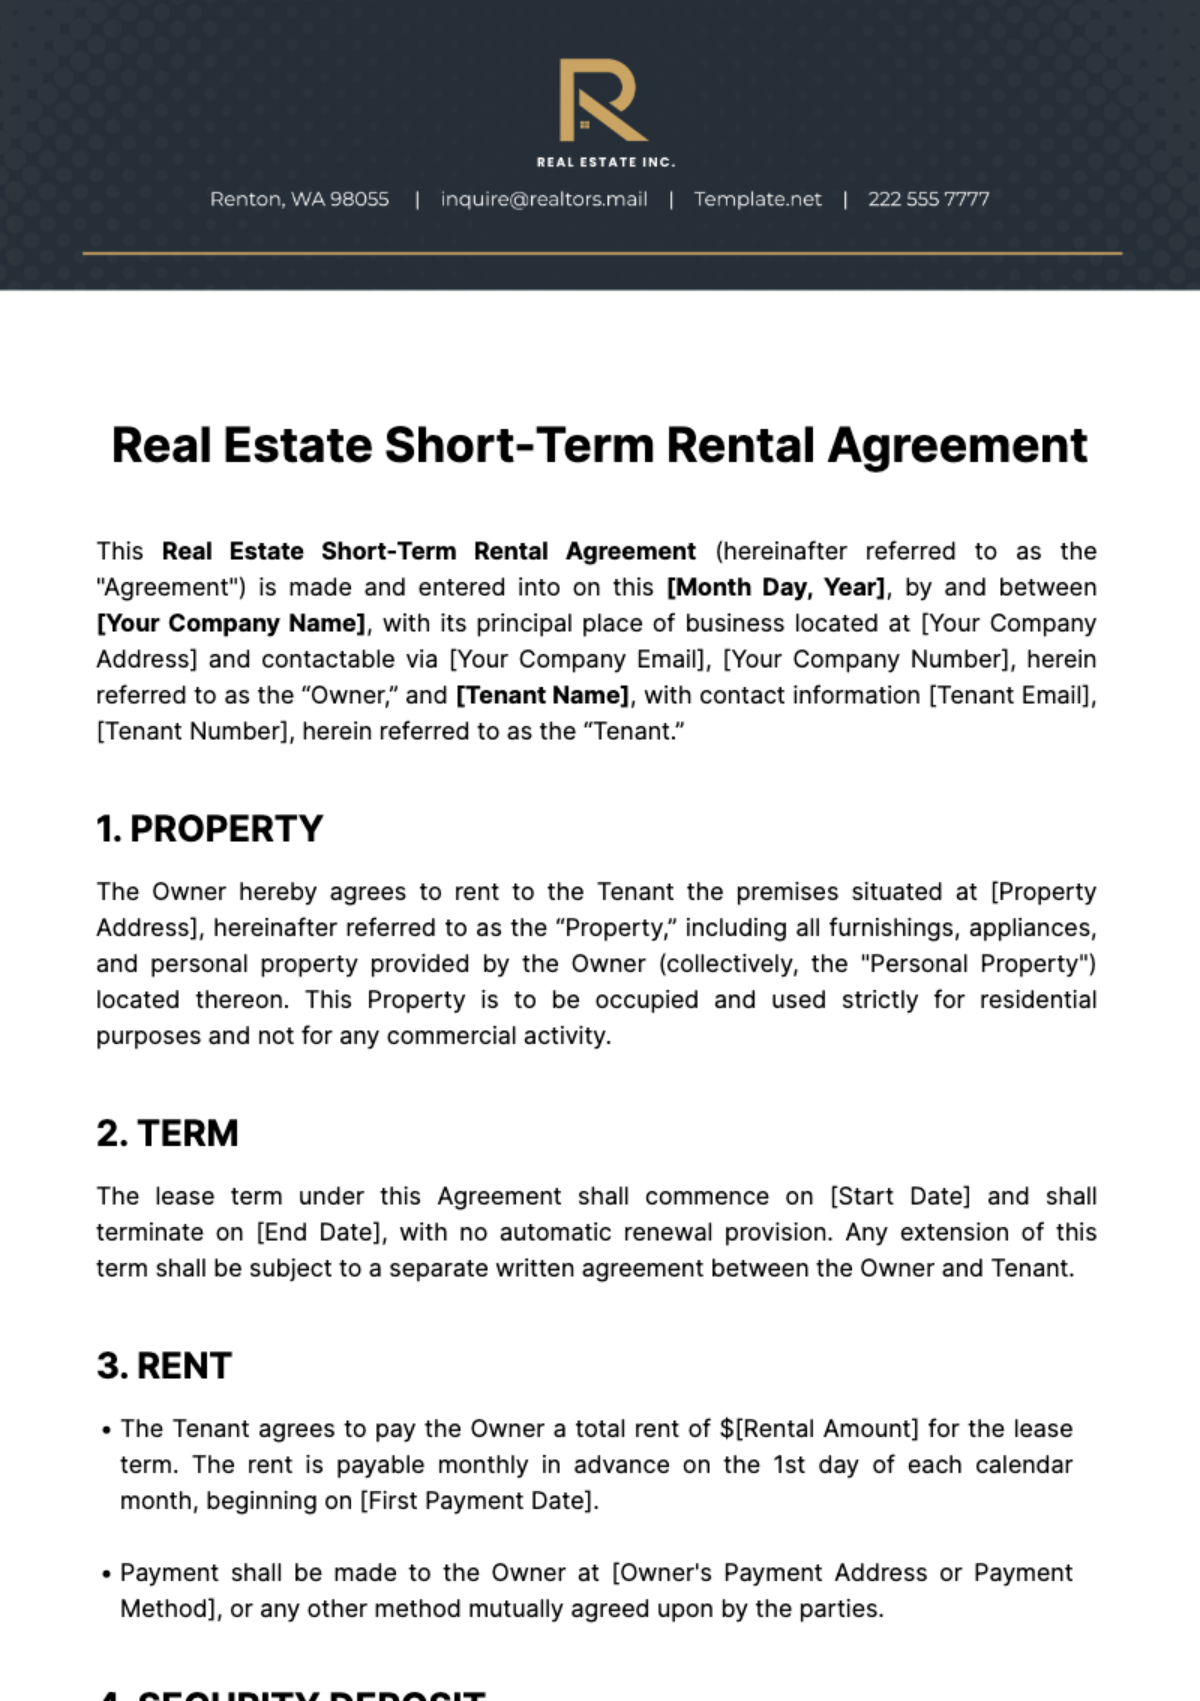 Real Estate Short-Term Rental Agreement Template